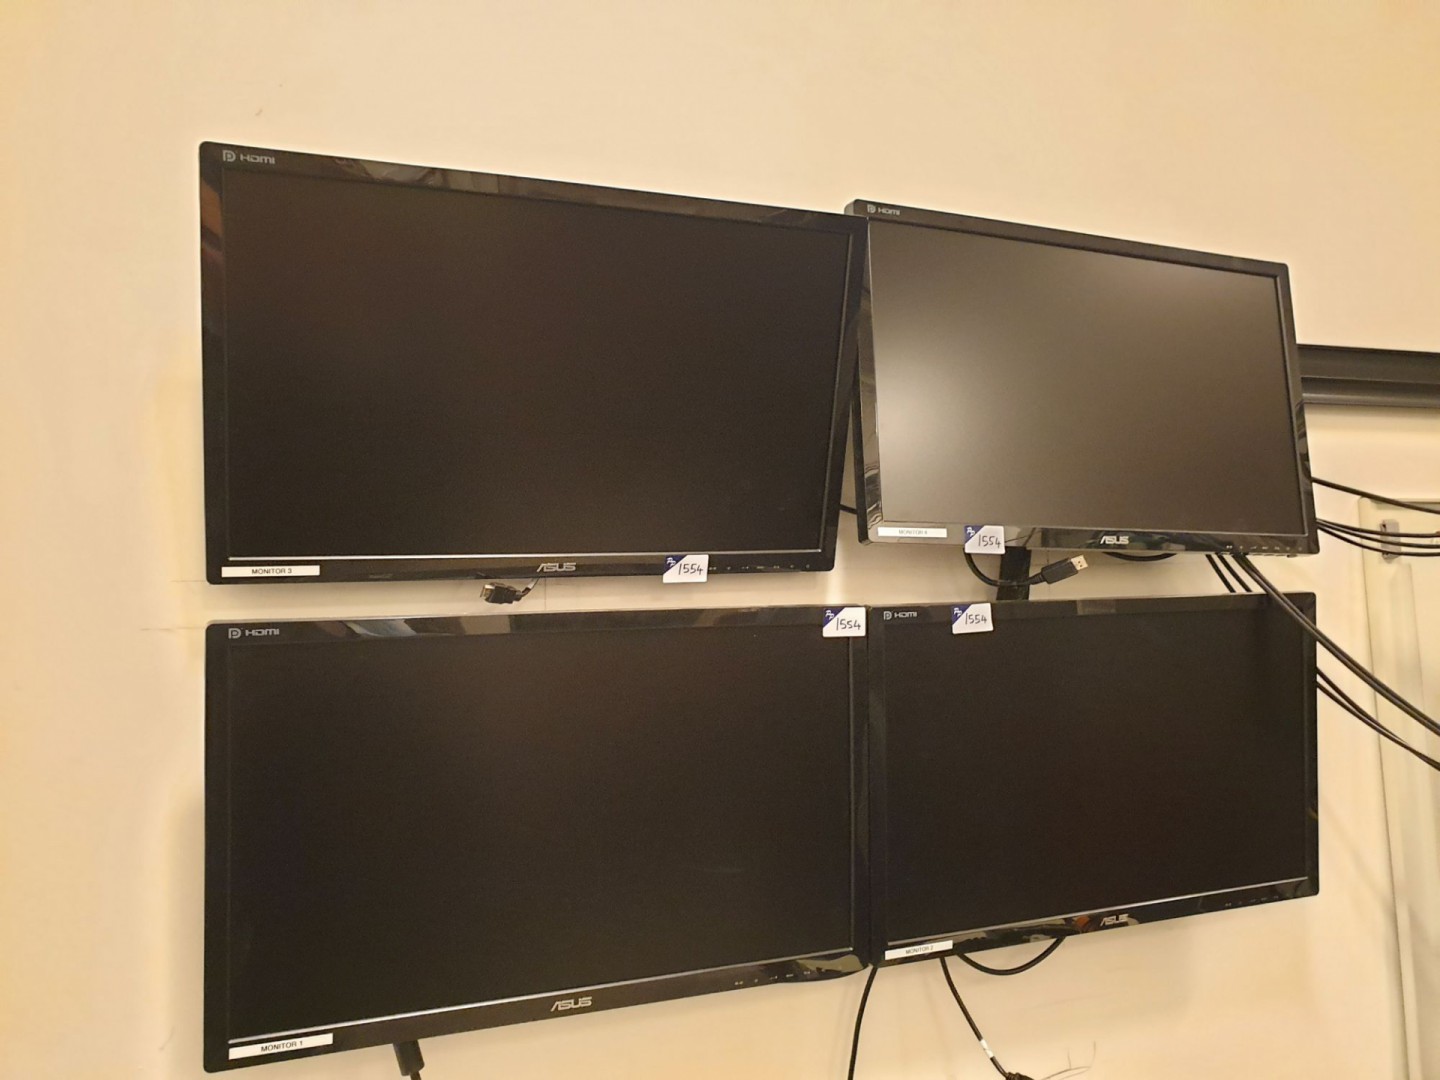 4x Asus LCD monitors on wall brackets